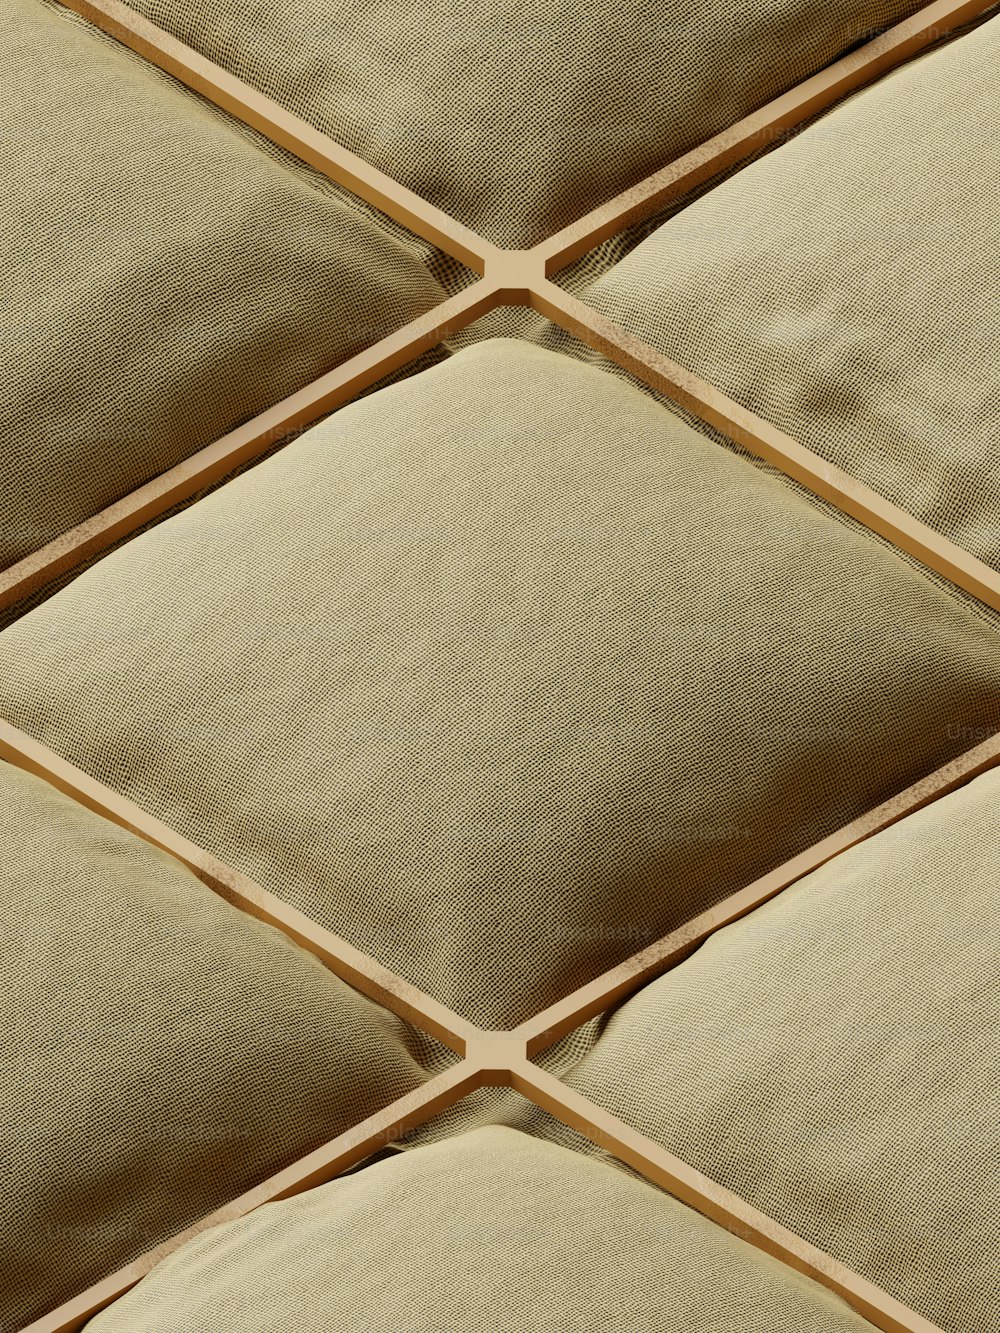 a close up view of a beige pillow